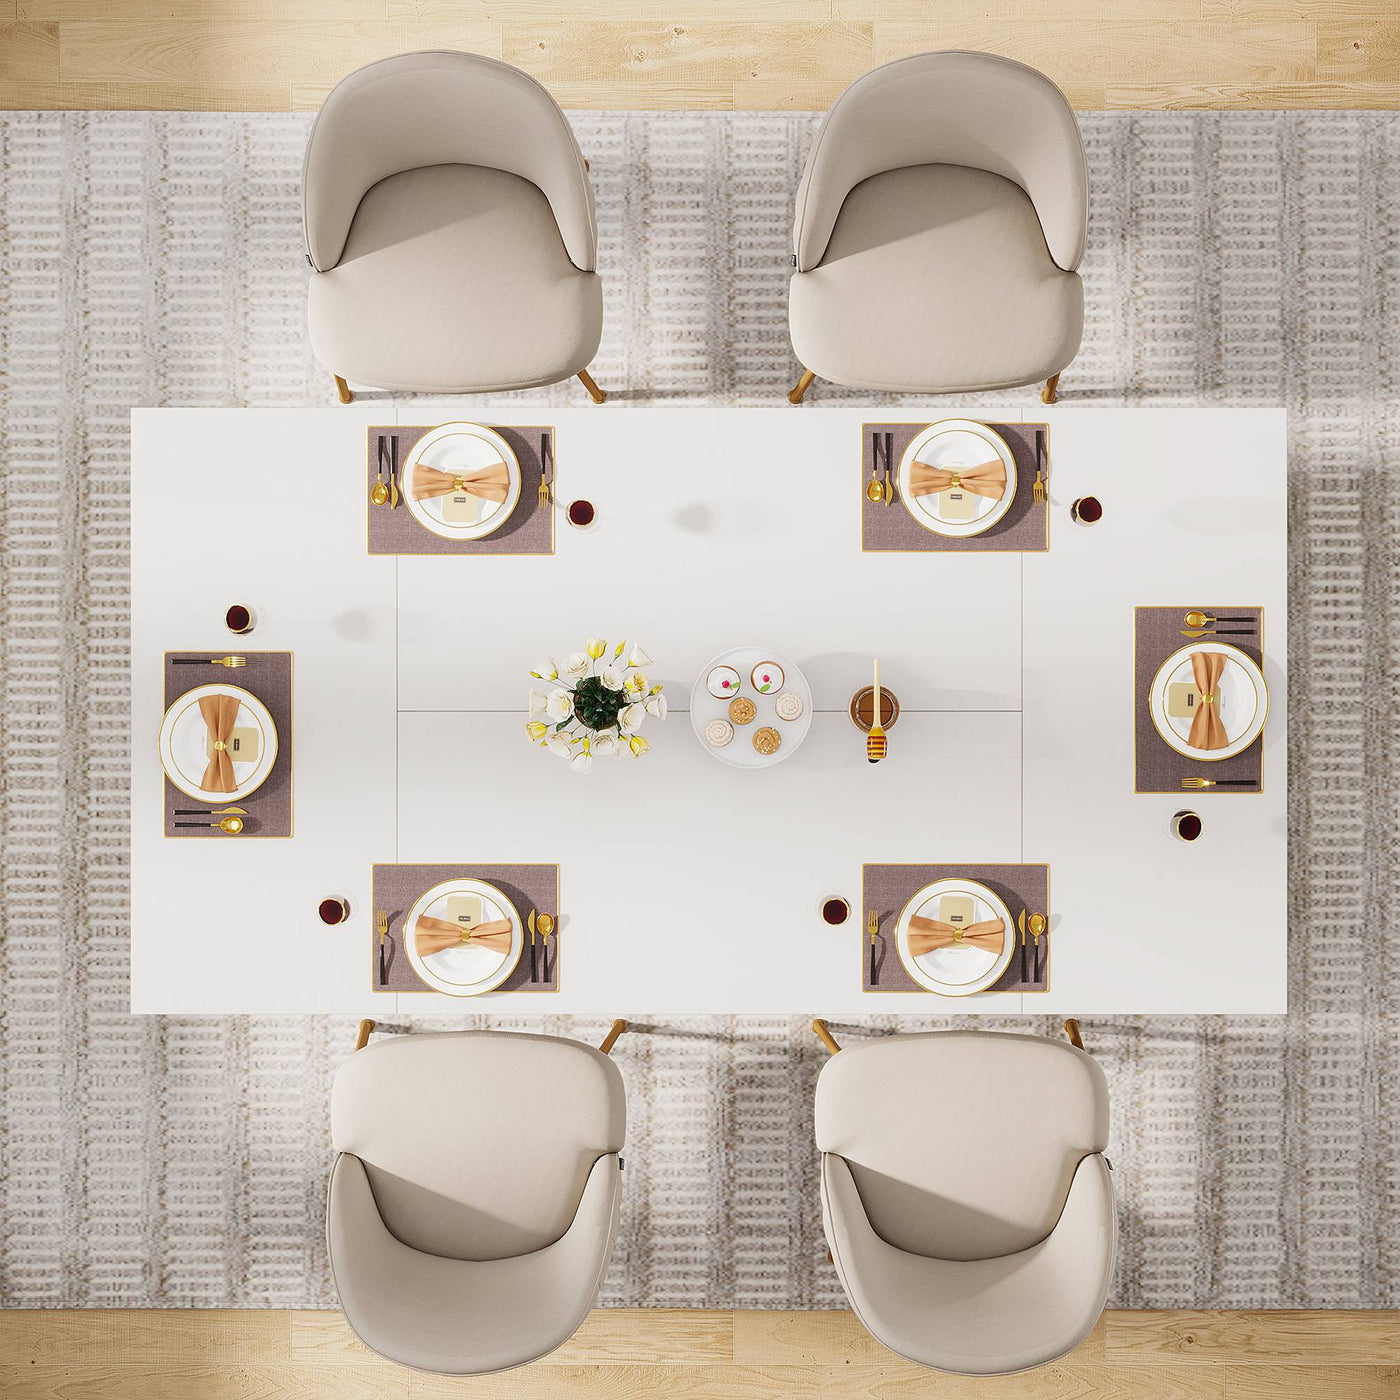 Mesa de comedor moderna Chevre | Mesa de cocina industrial de mármol y madera rectangular, mesa de comedor para 6 personas